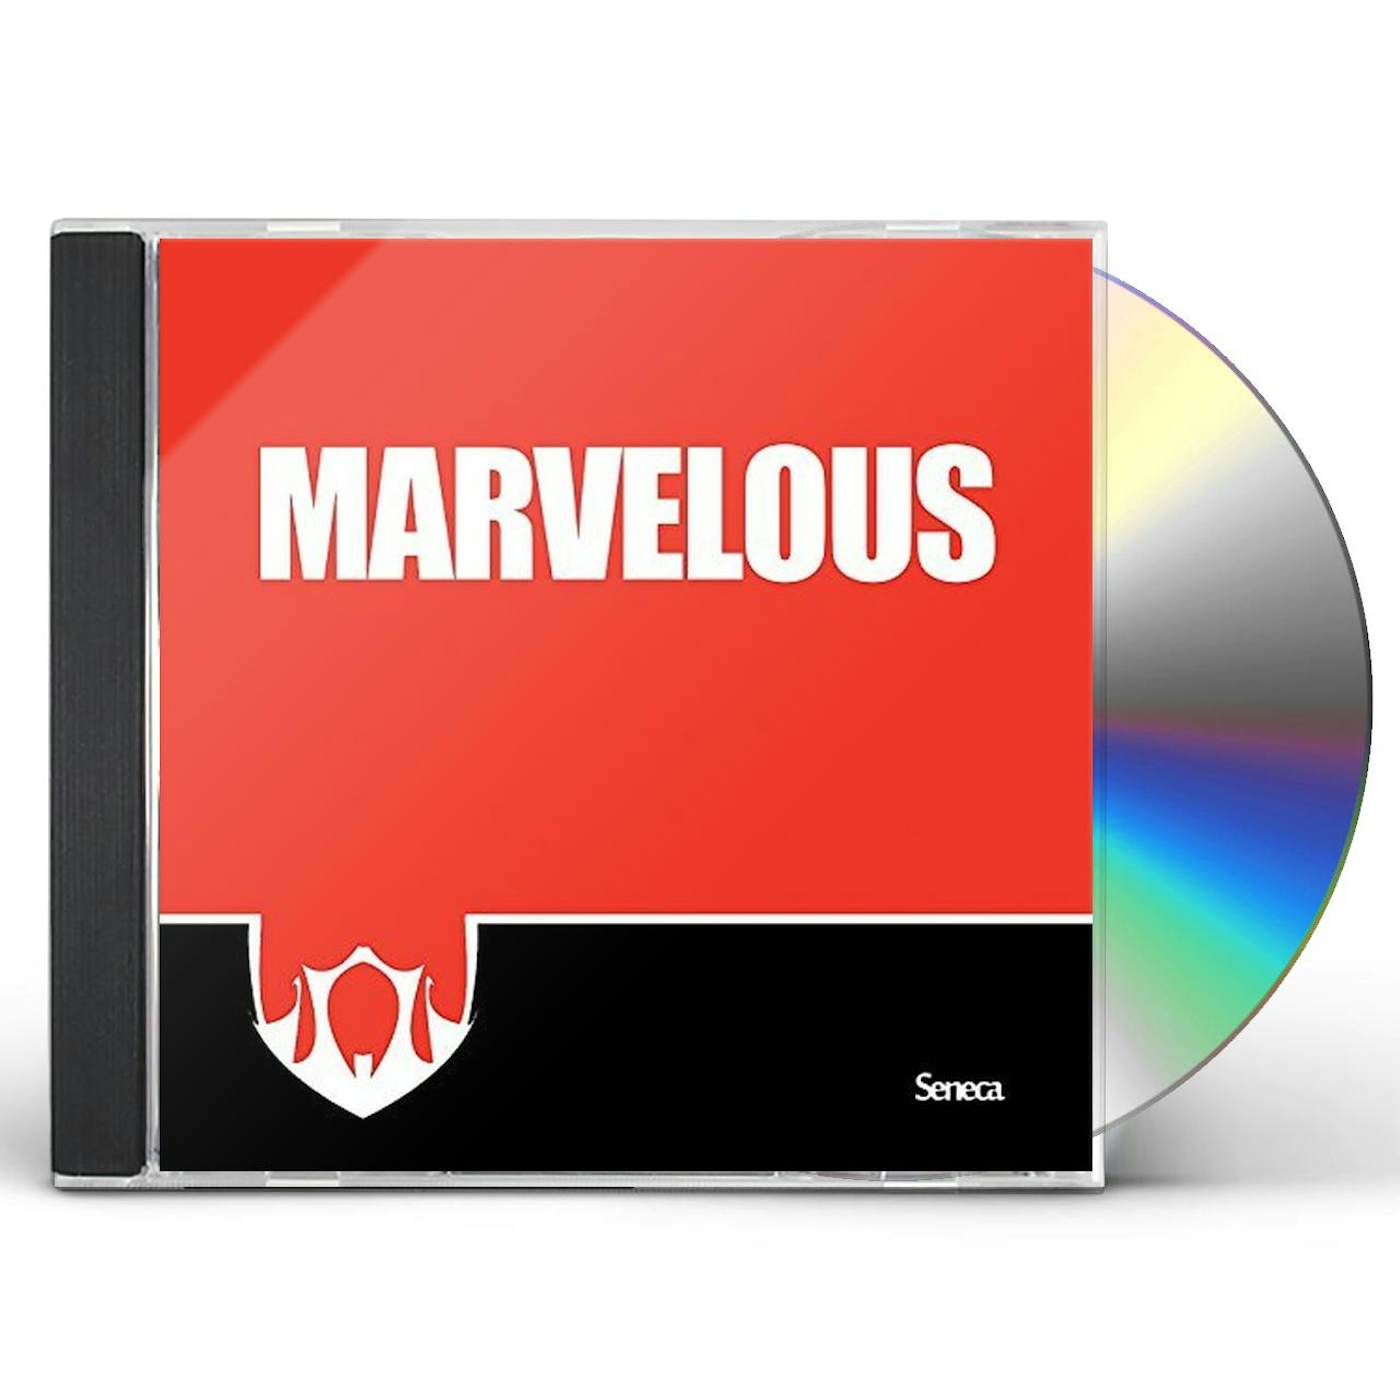 Seneca MARVELOUS CD